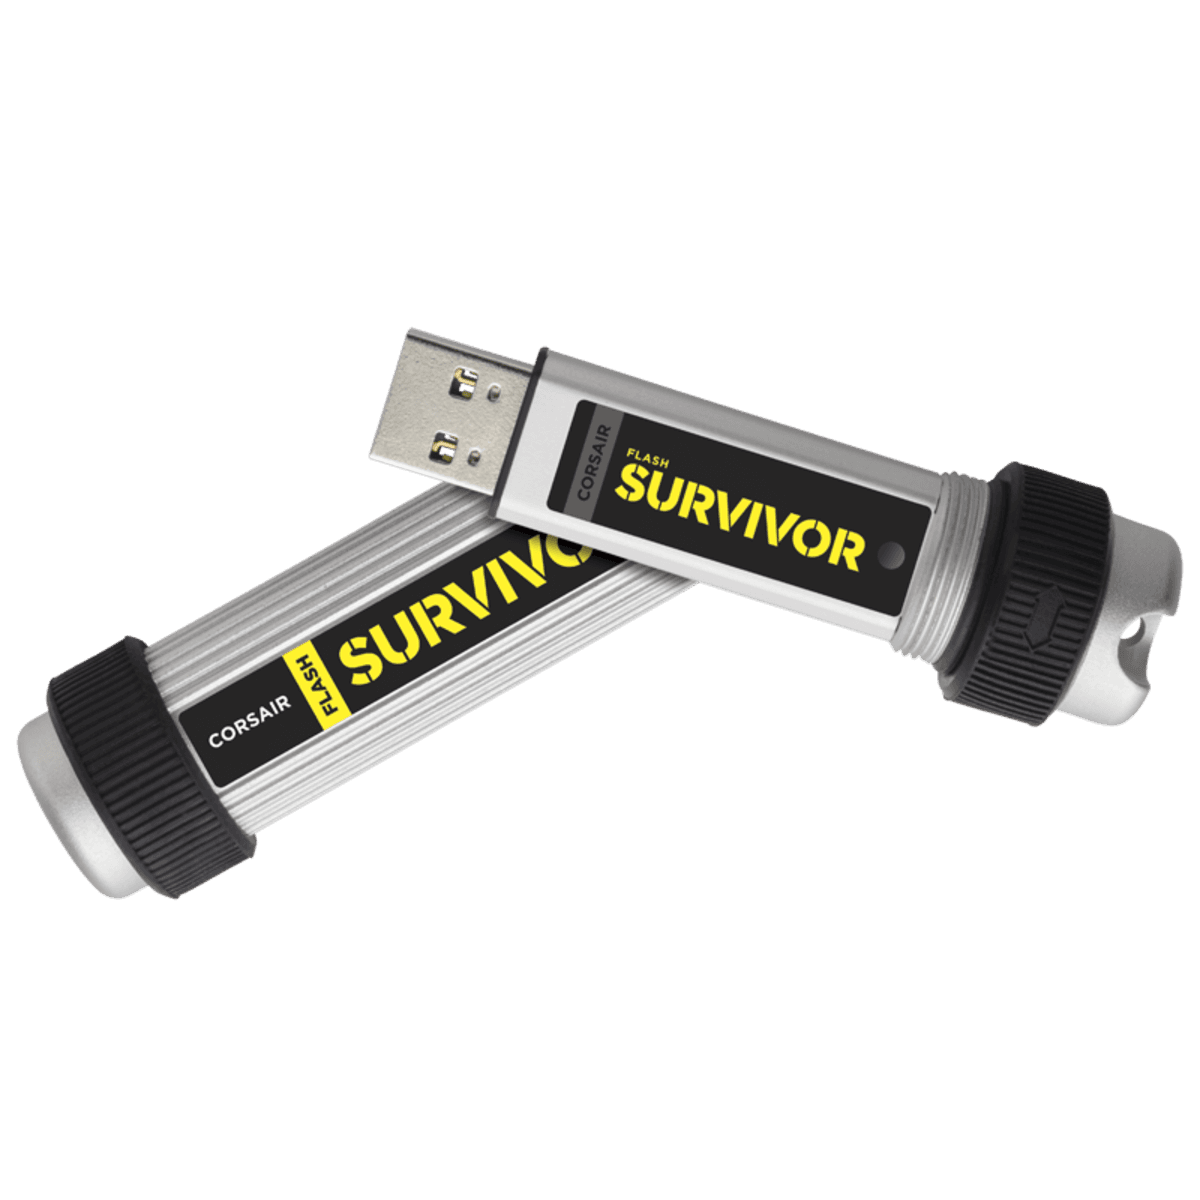 Corsair Flash Survivor® 64GB USB 3.0 Flash Drive